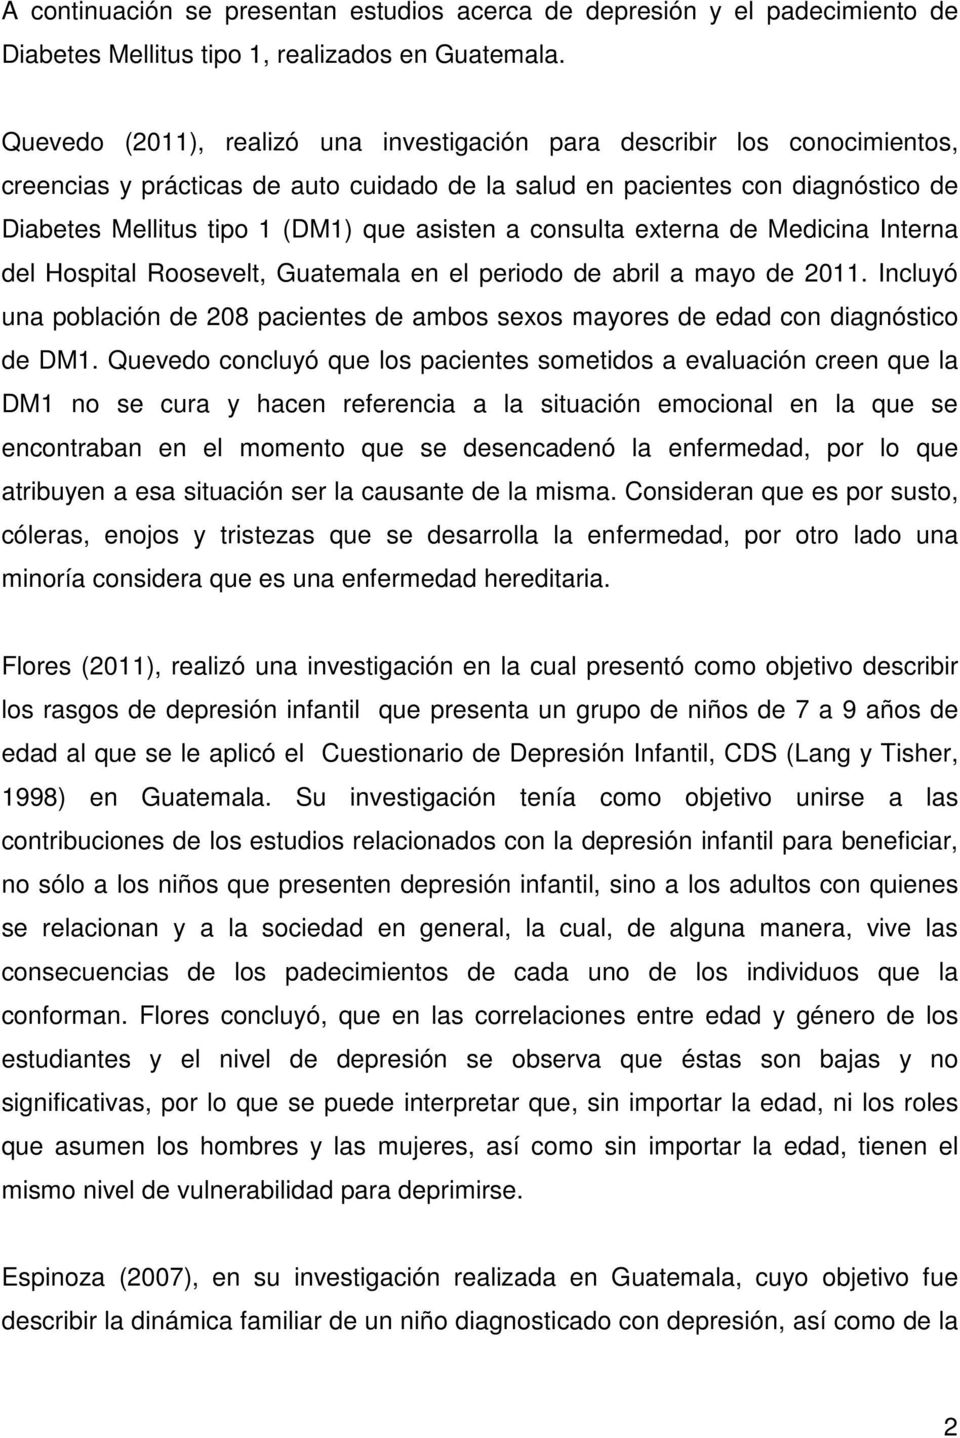 asisten a consulta externa de Medicina Interna del Hospital Roosevelt, Guatemala en el periodo de abril a mayo de 2011.